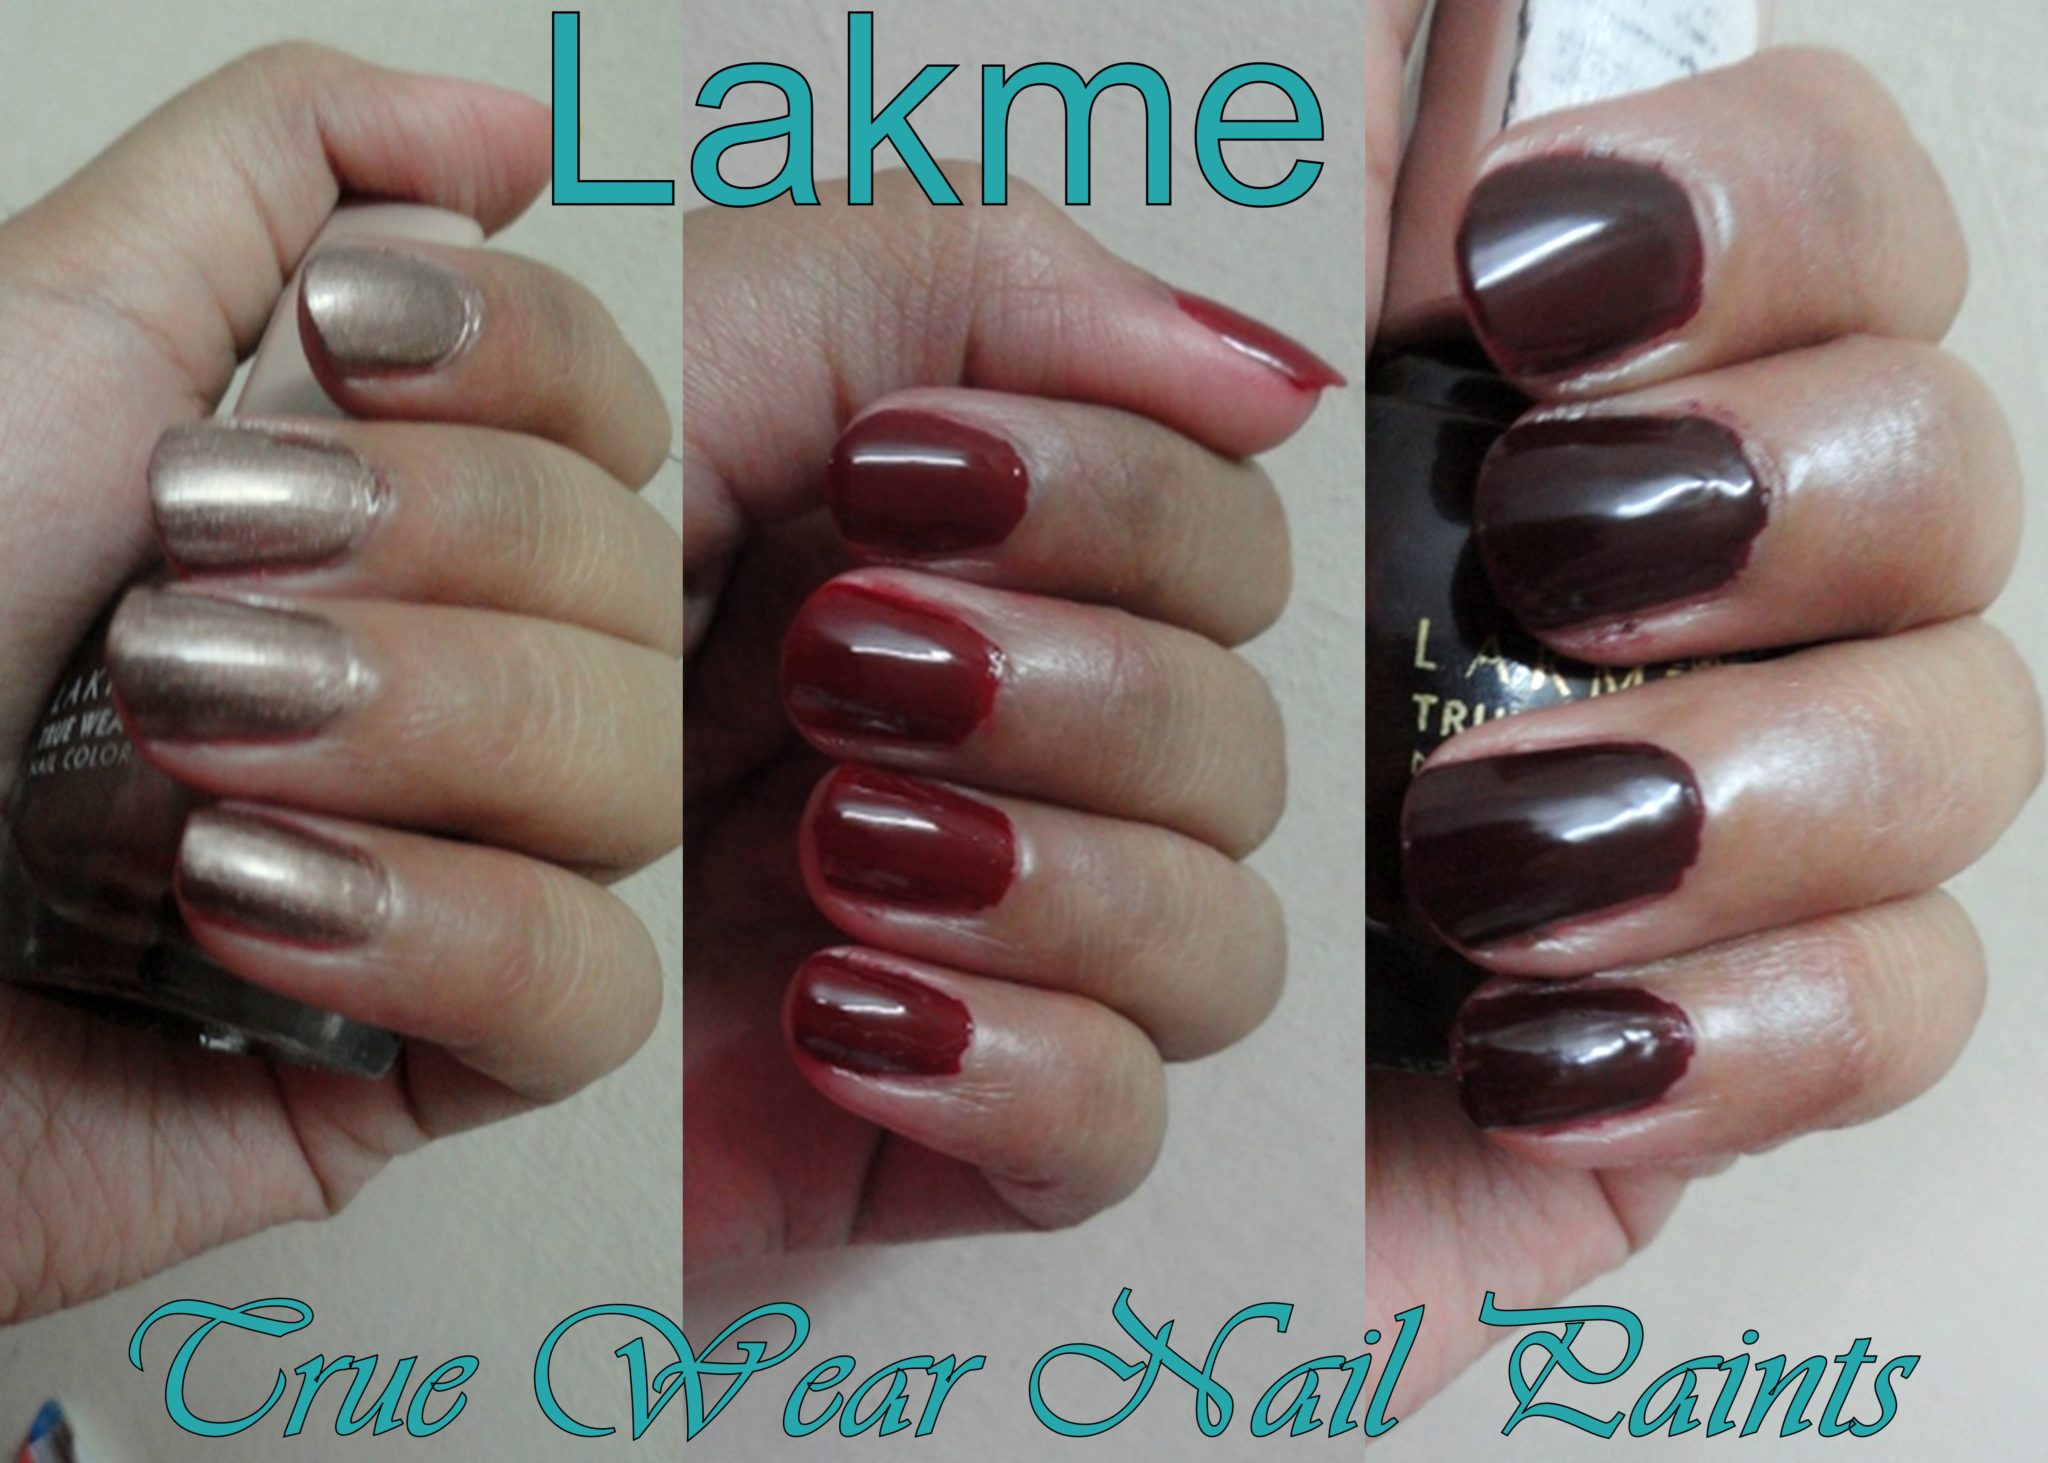 2. Lakme True Wear Nail Color 506 - Amazon - wide 6